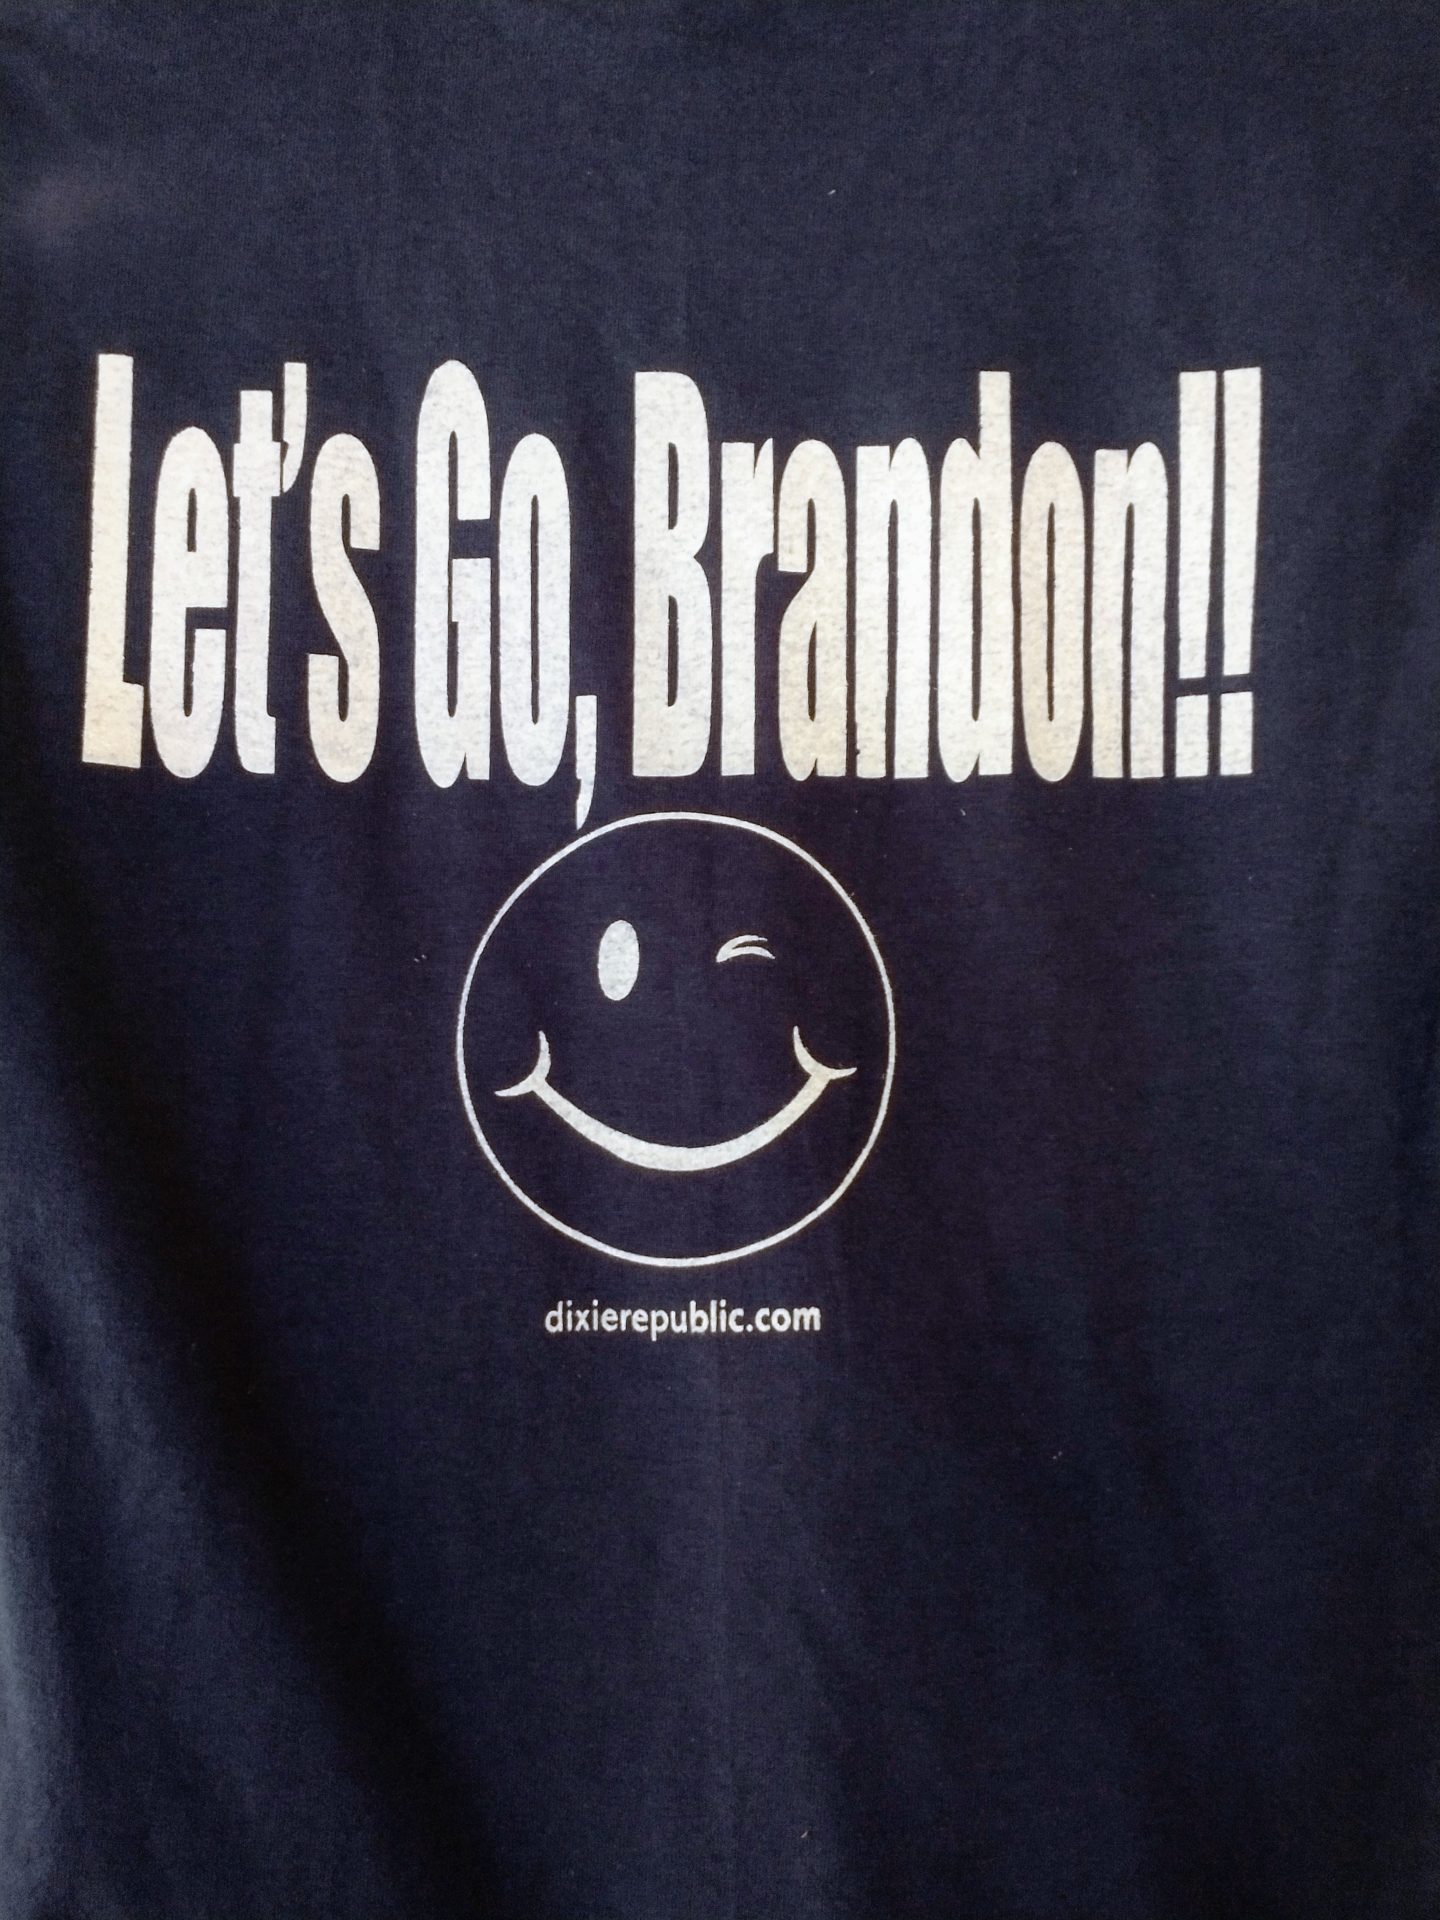 Lets Go Brandon FJB / Back the Blue Decal 